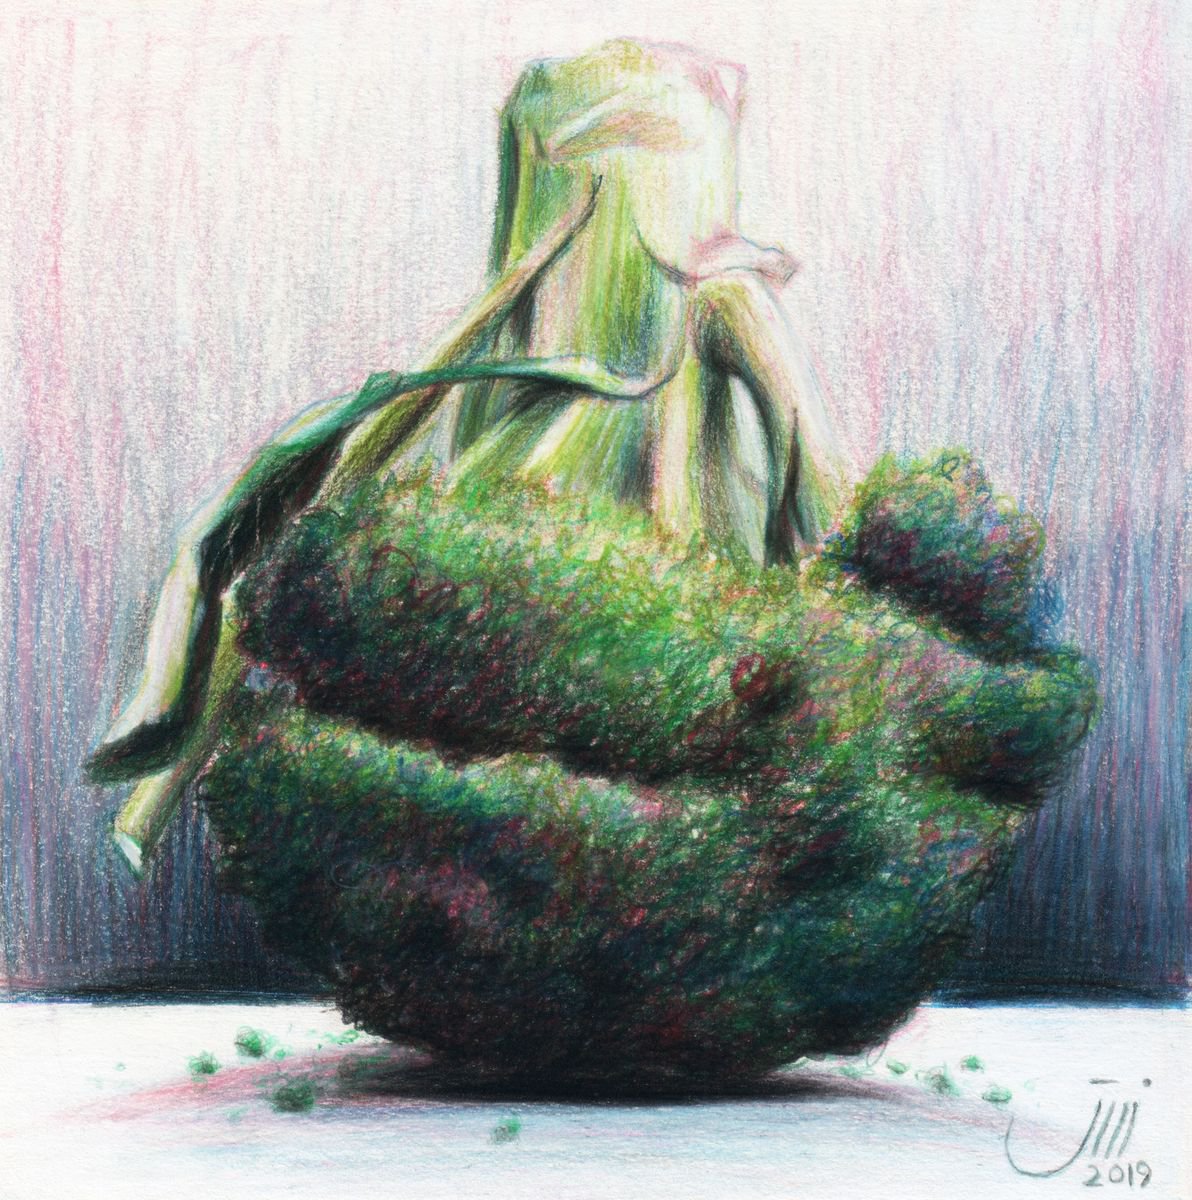 No.129, A Broccoli by sedigheh zoghi